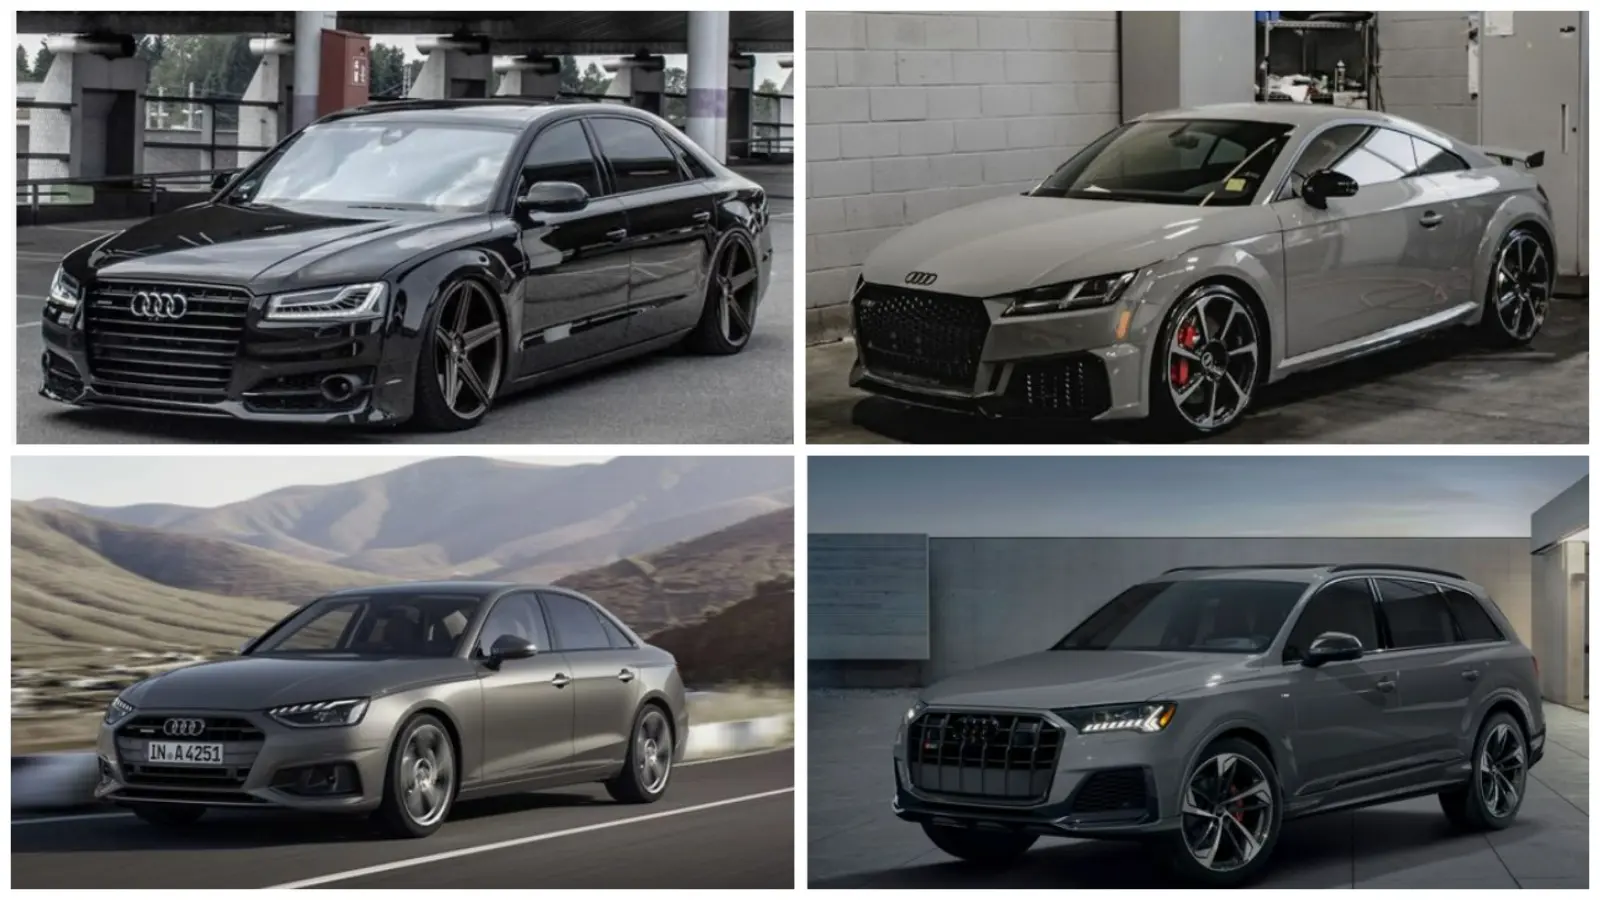 Top 7 Audi Vehicle Models